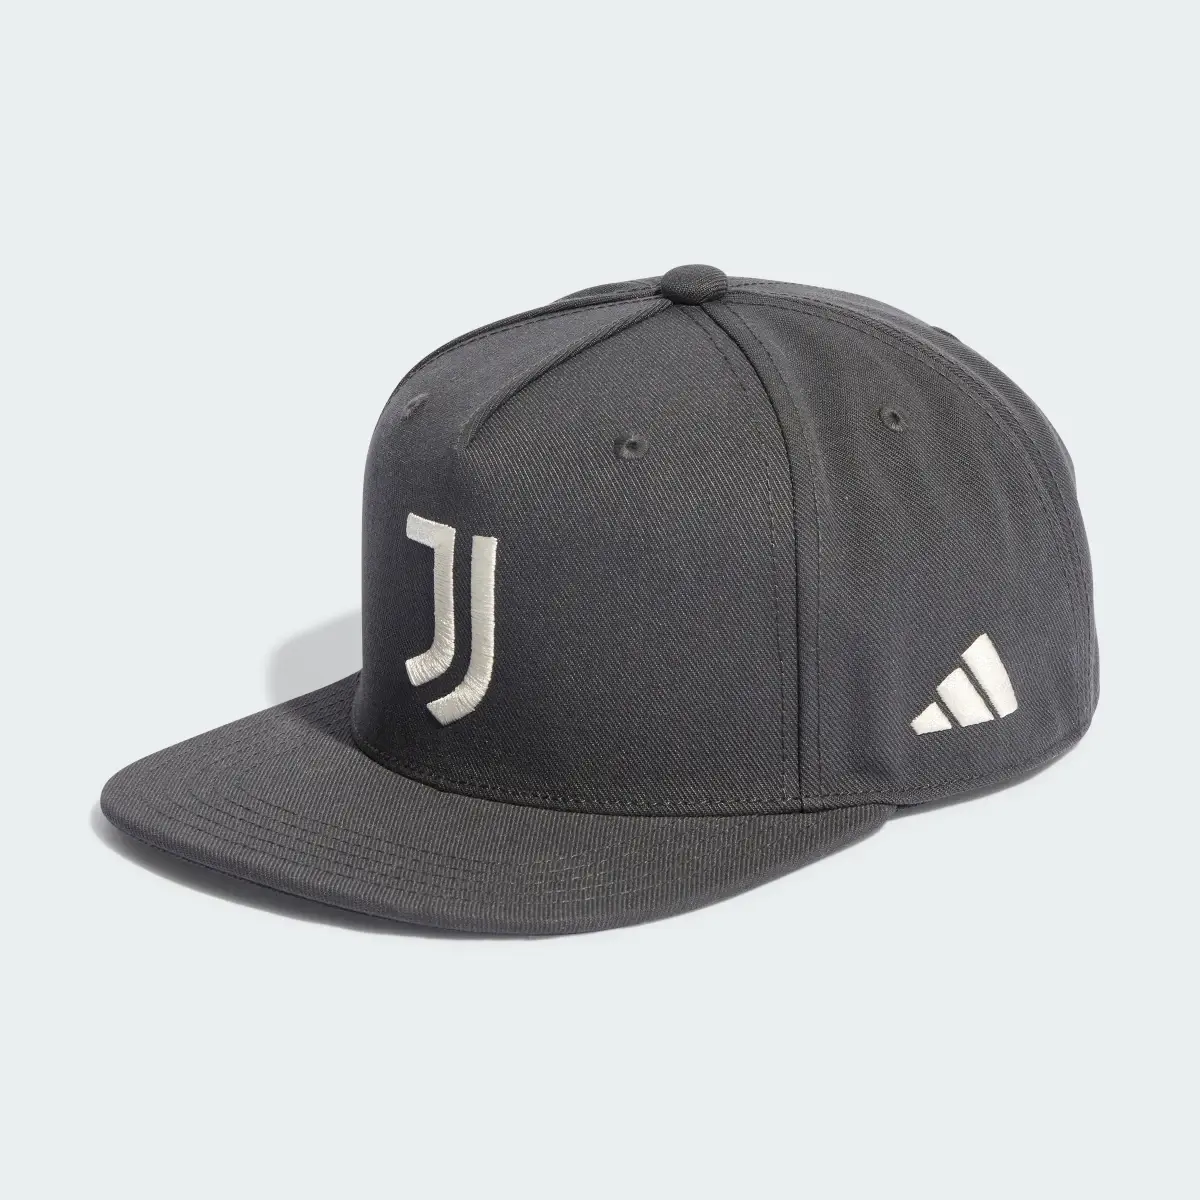 Adidas Juventus Football Snapback Cap. 2